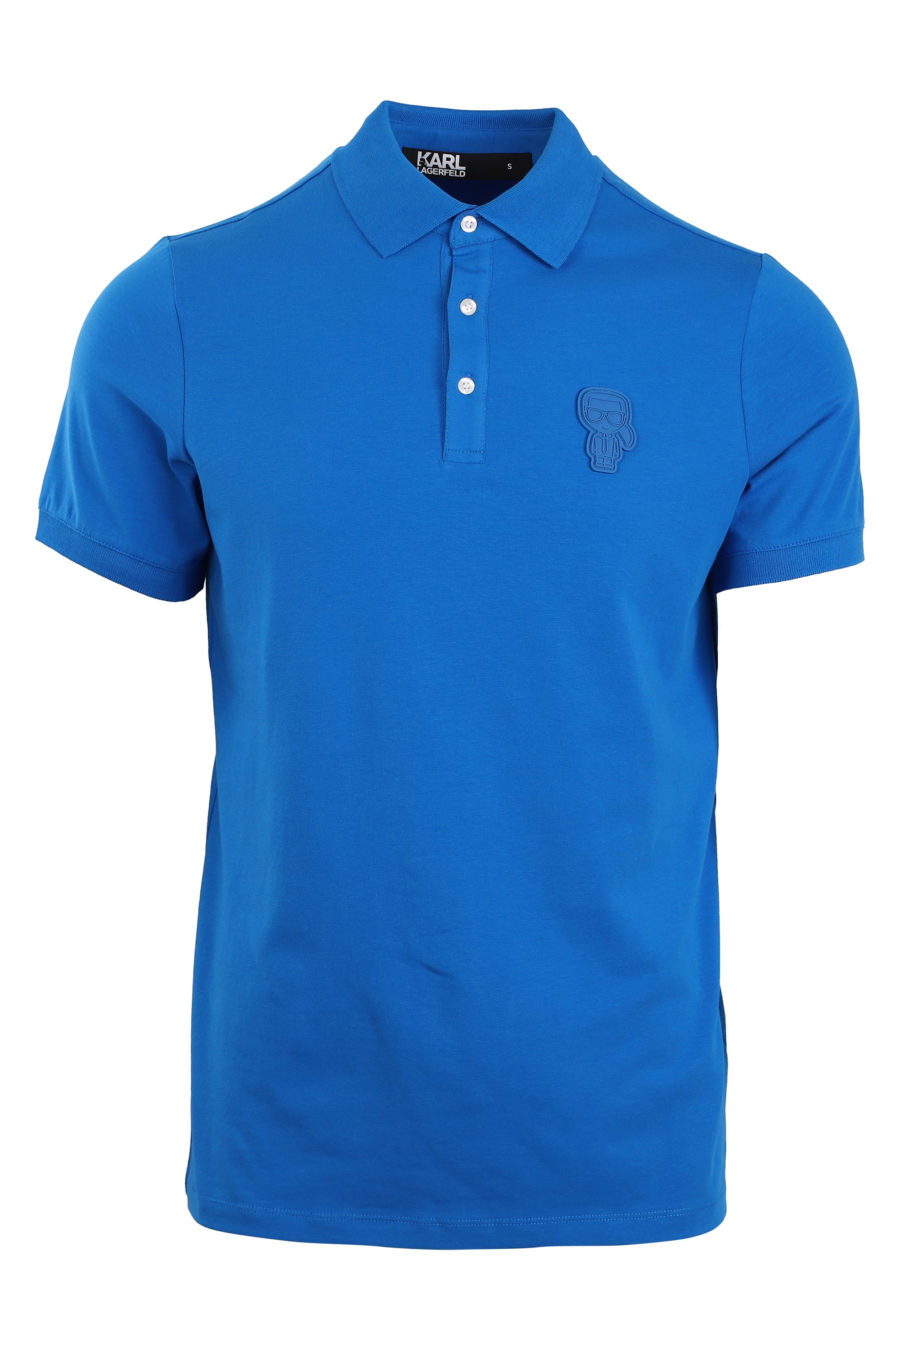 Blue polo shirt with monochrome logo - IMG 0882